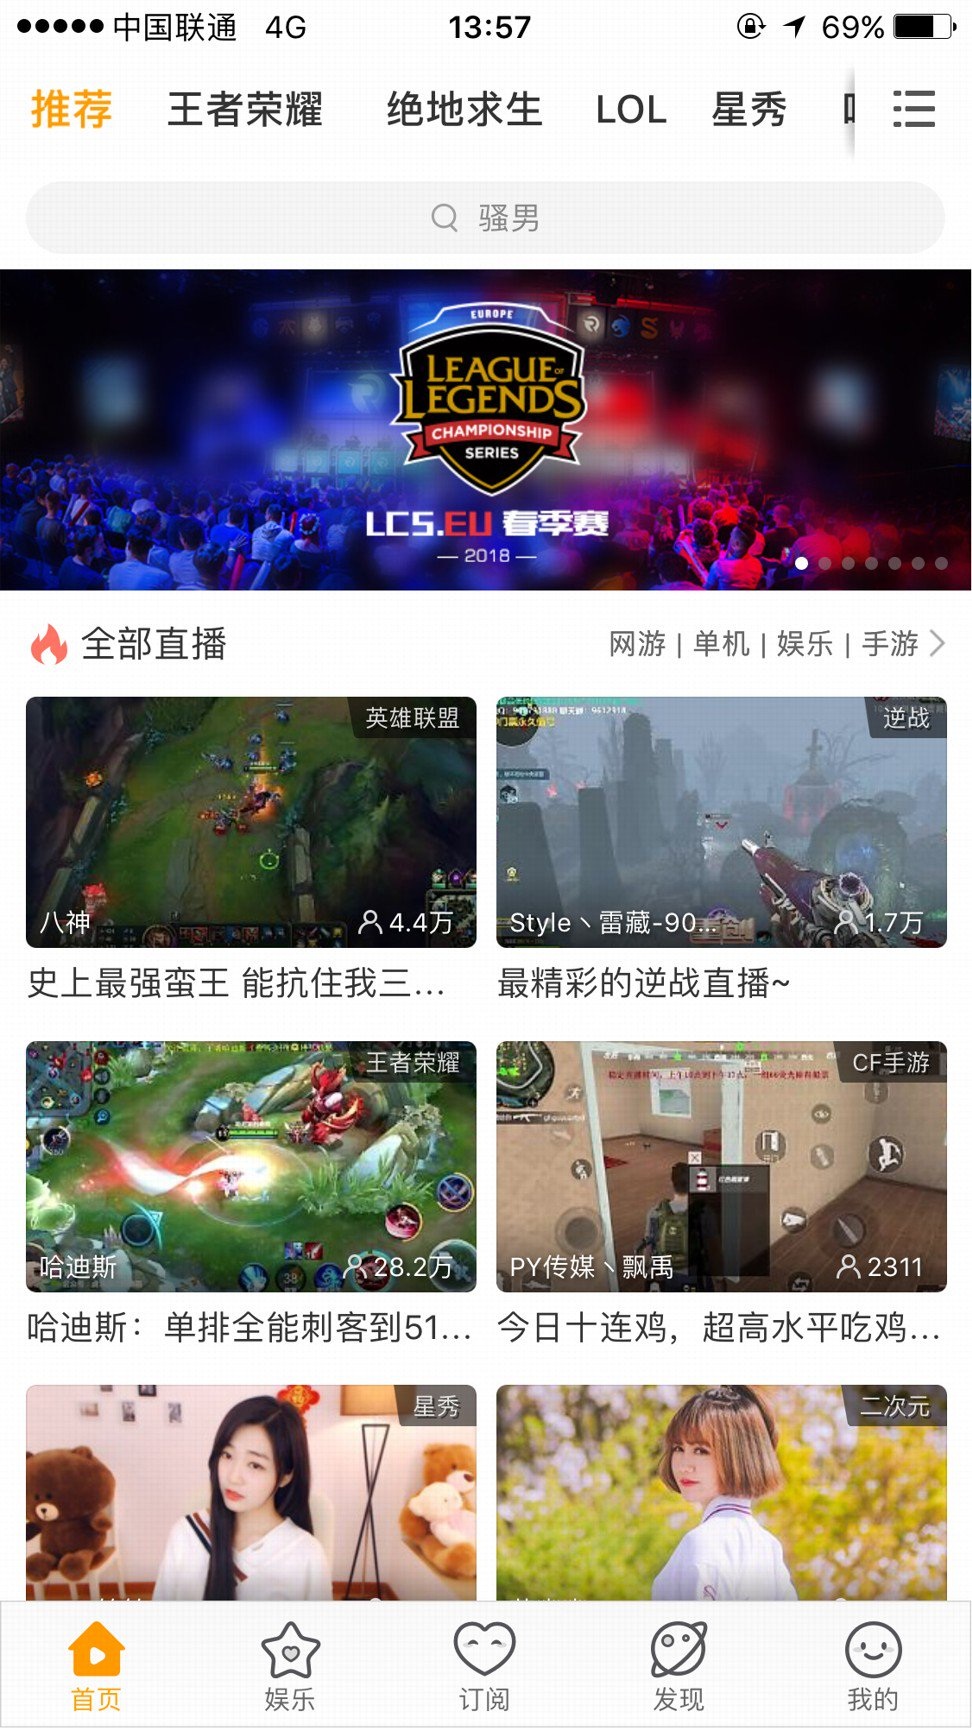 Screenshots of game live streaming platform Huya